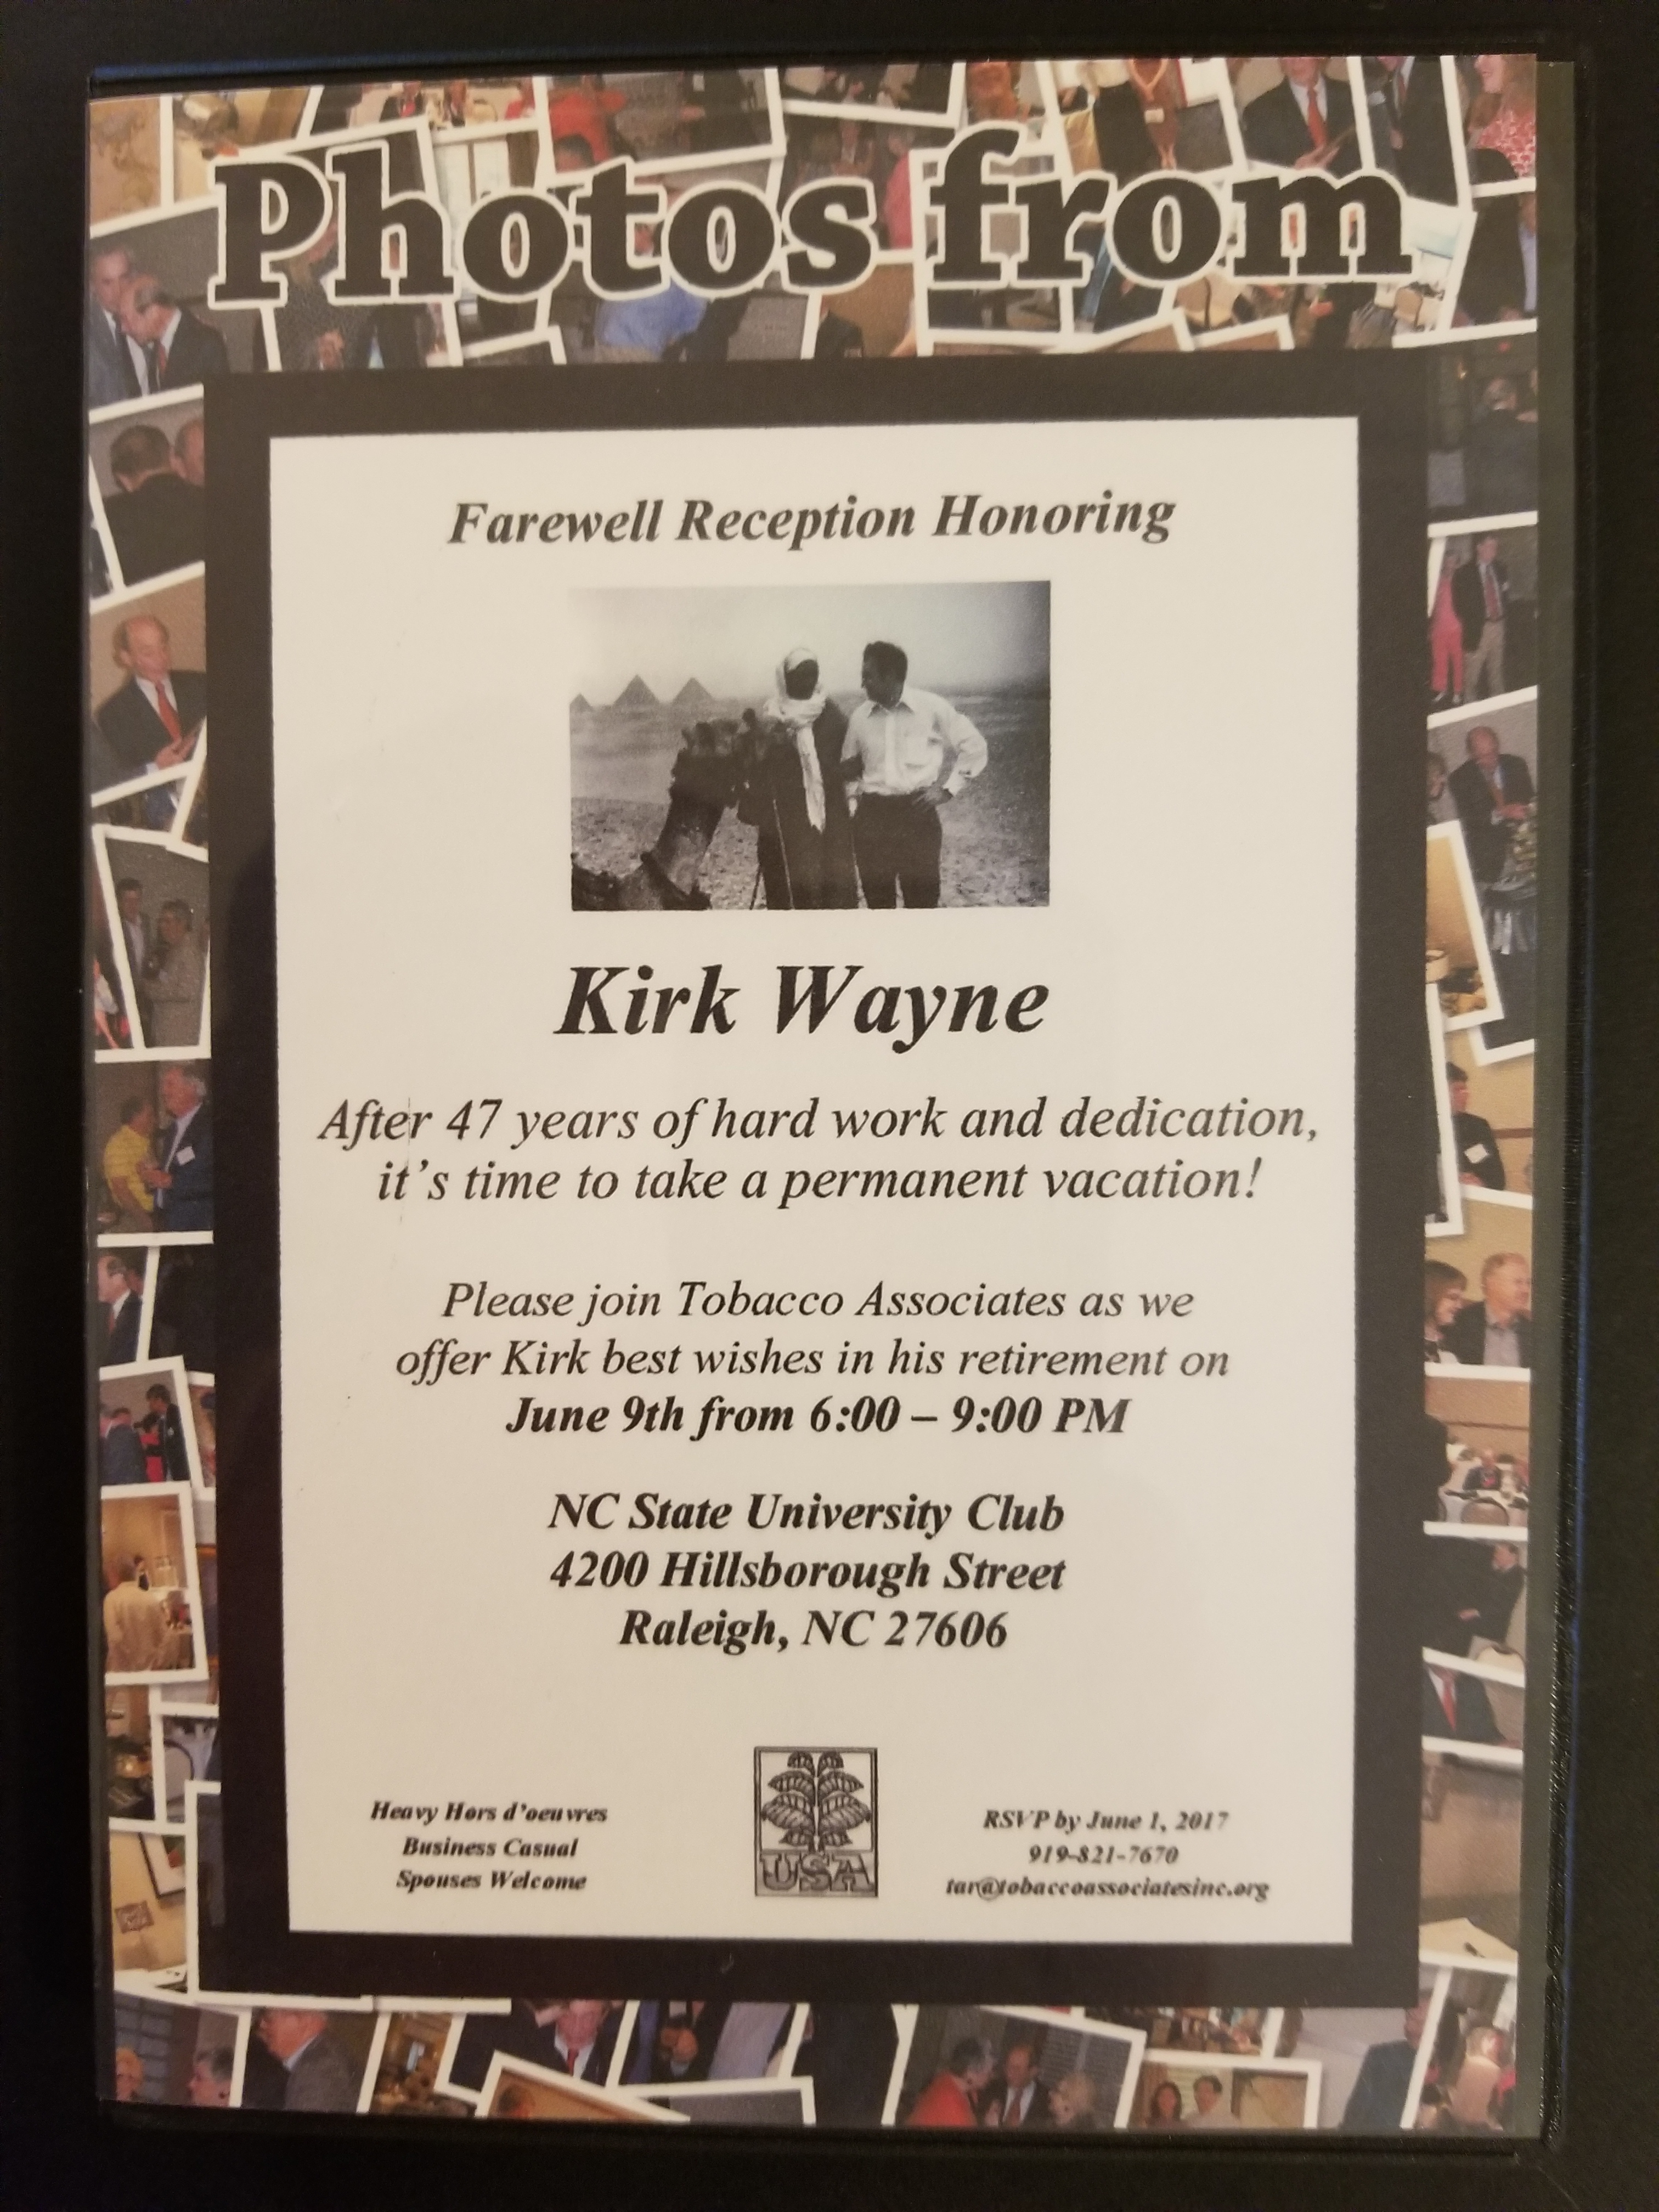 Kirk Wayne's Retirement Celebration Highlights